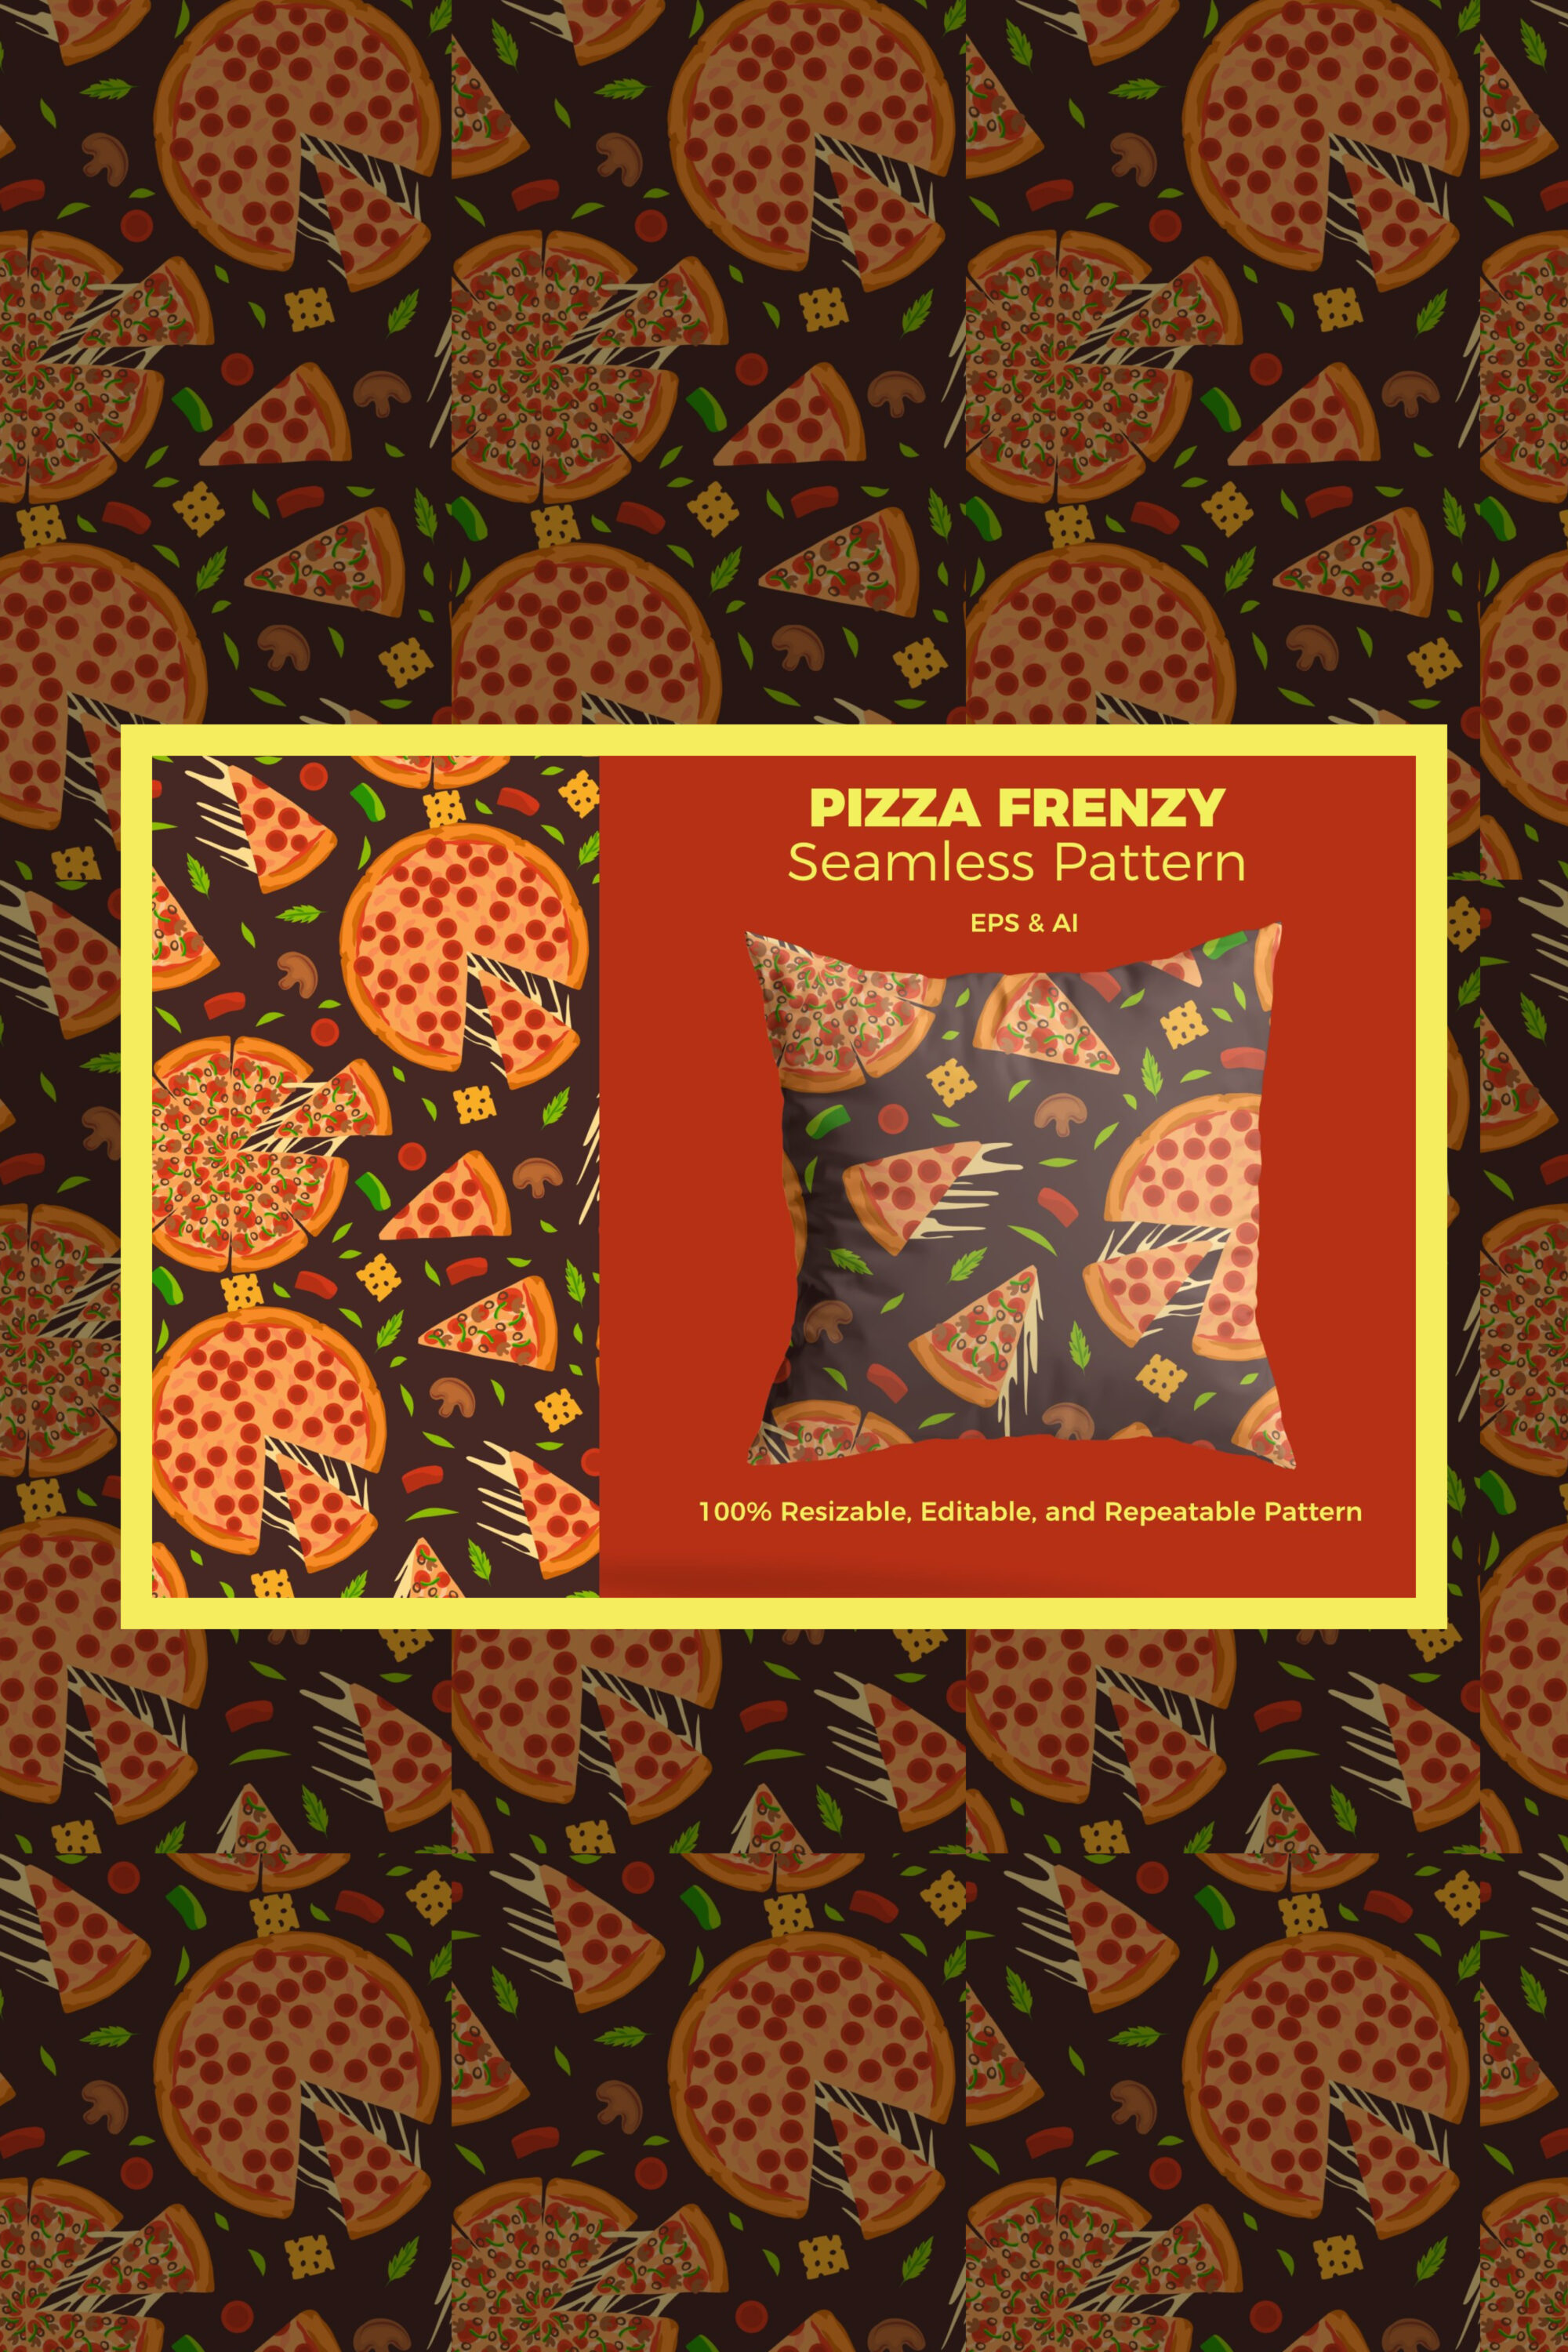 Pizza frenzy pattern of pinterest.